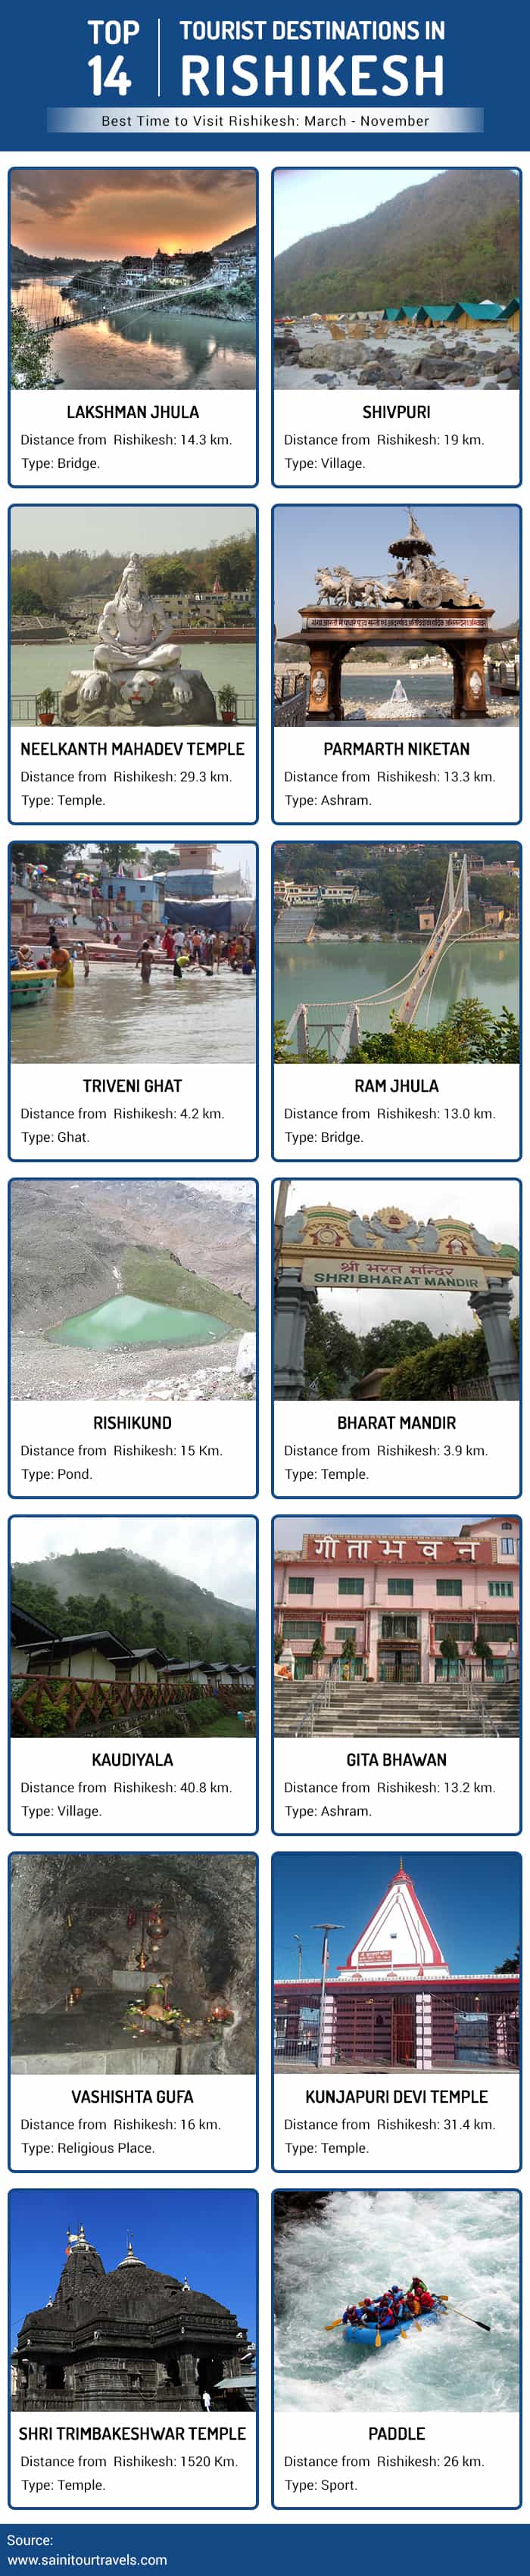 Top 14 Tourist Destinations in Rishikesh